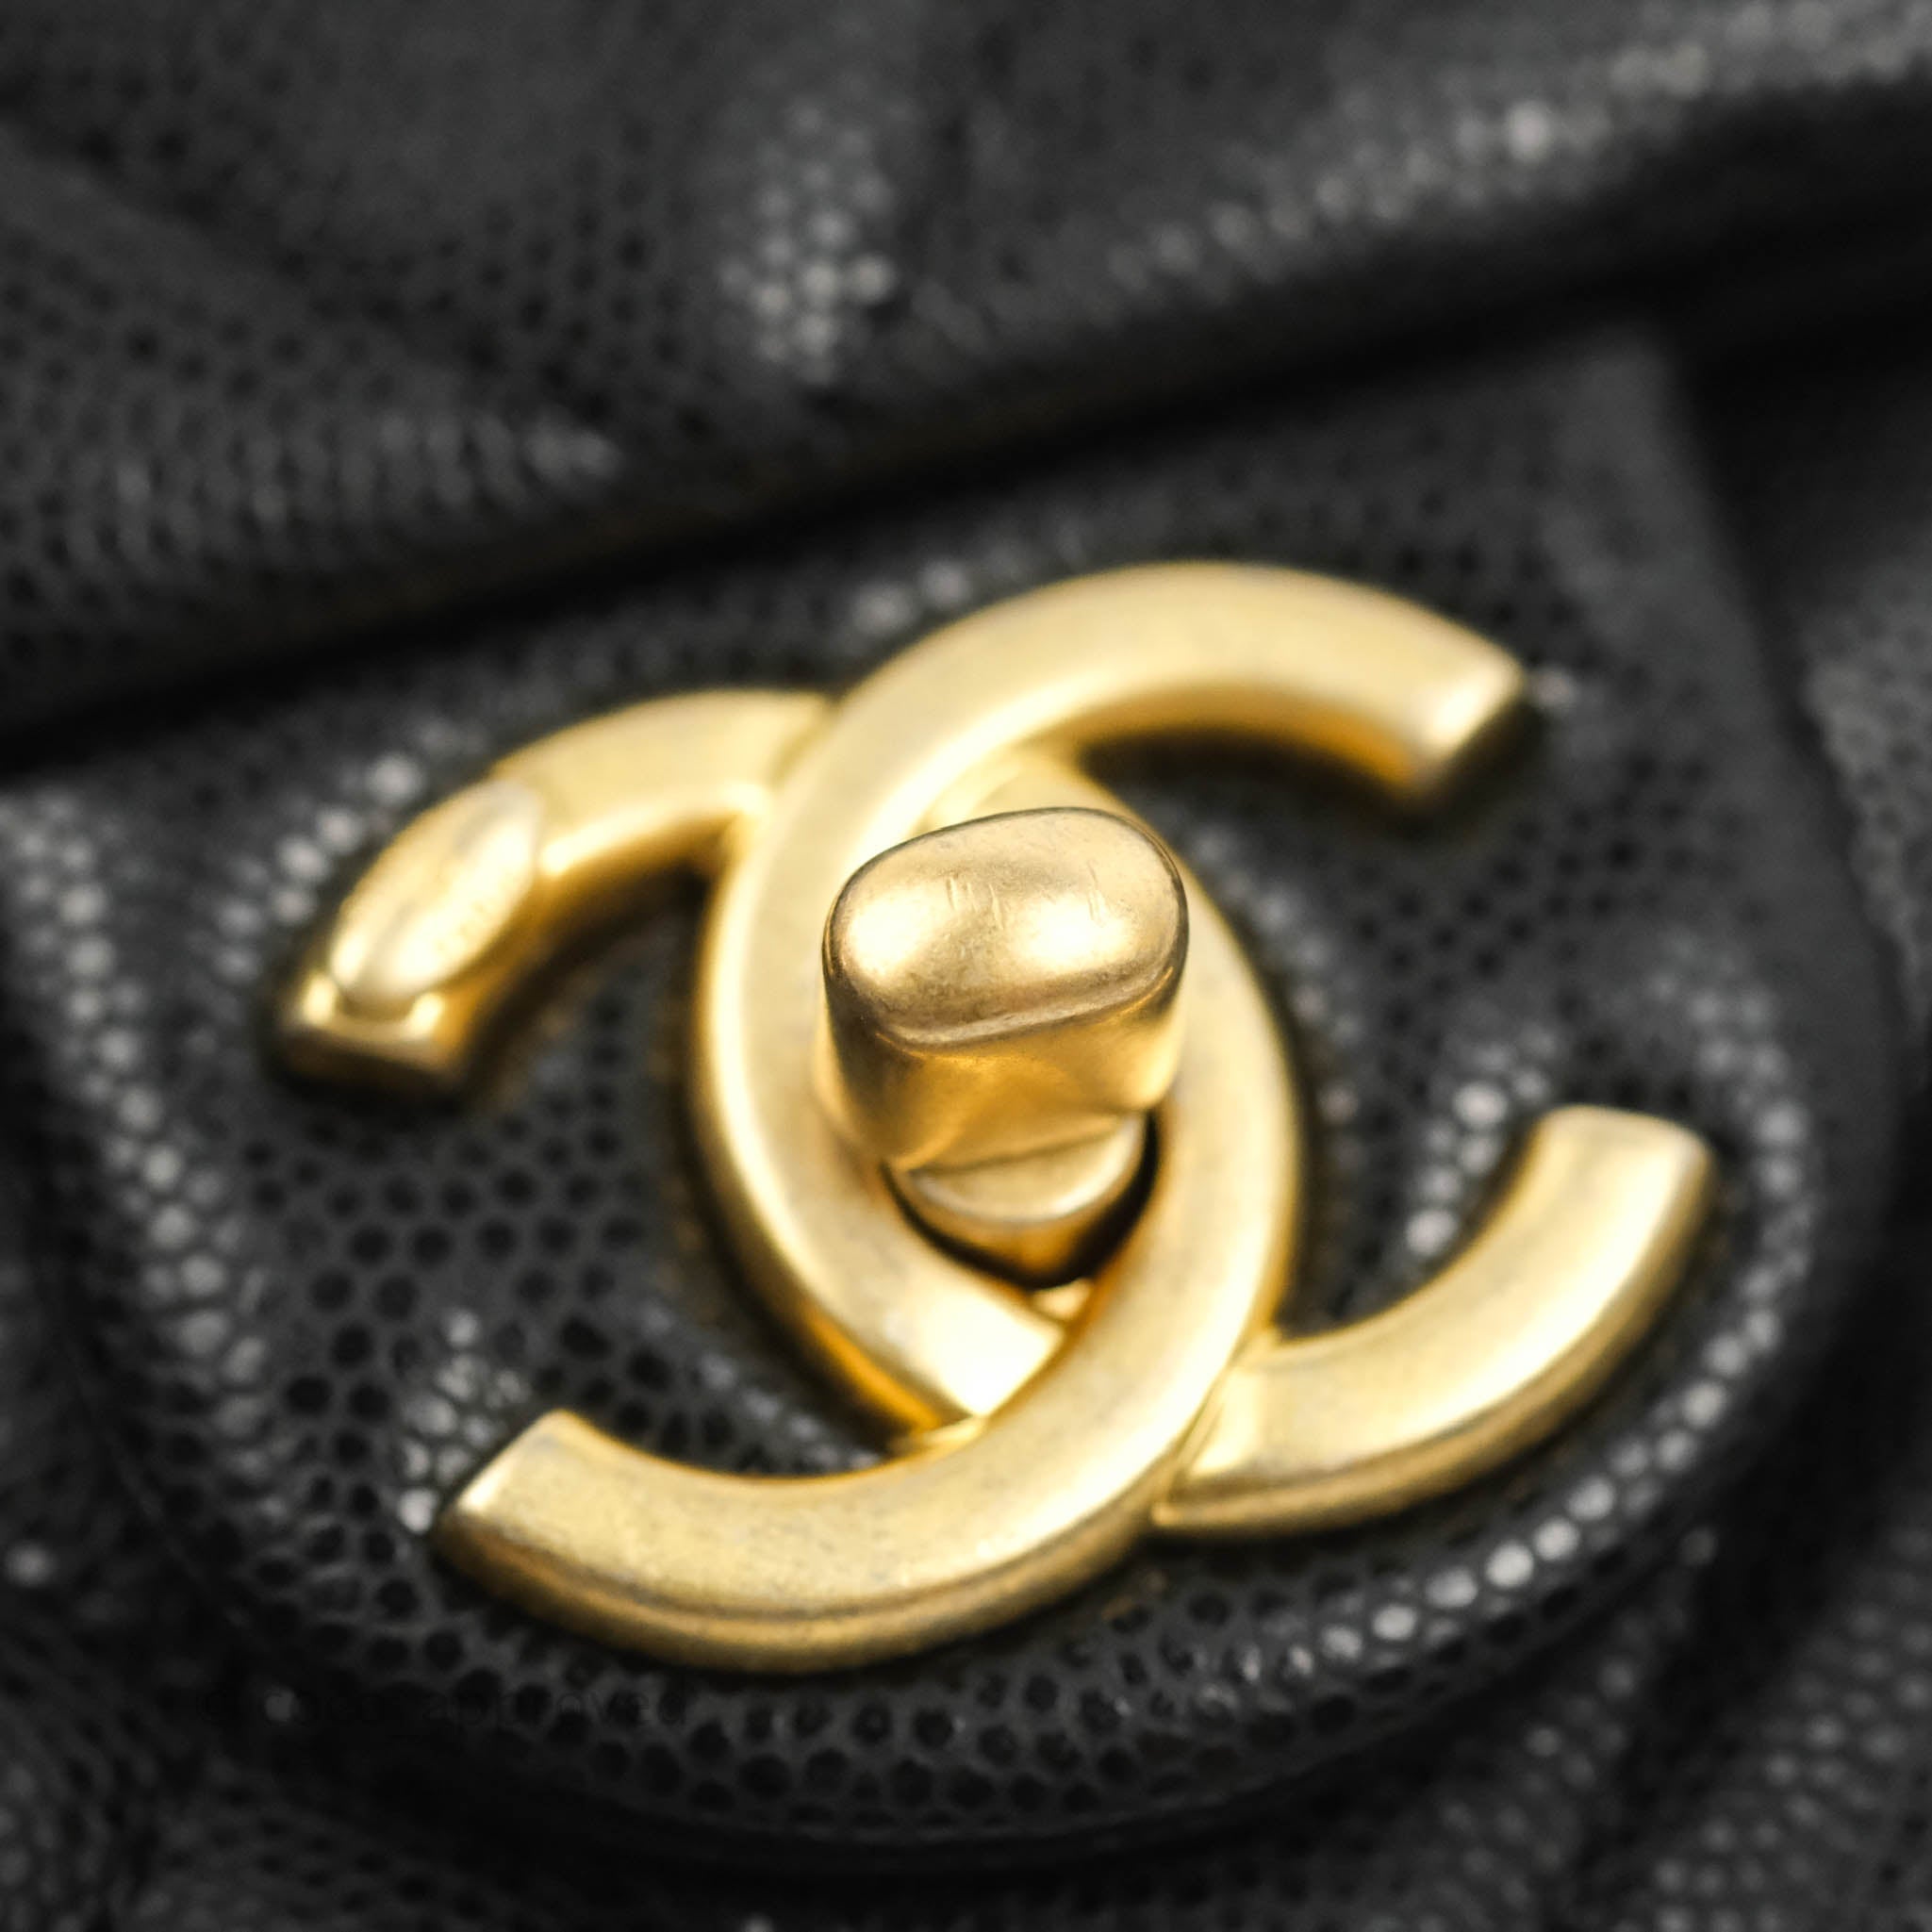 NWT! 🖤23C CHANEL “CC You” Mini Flap🖤 Chain Black Caviar Bag Gold